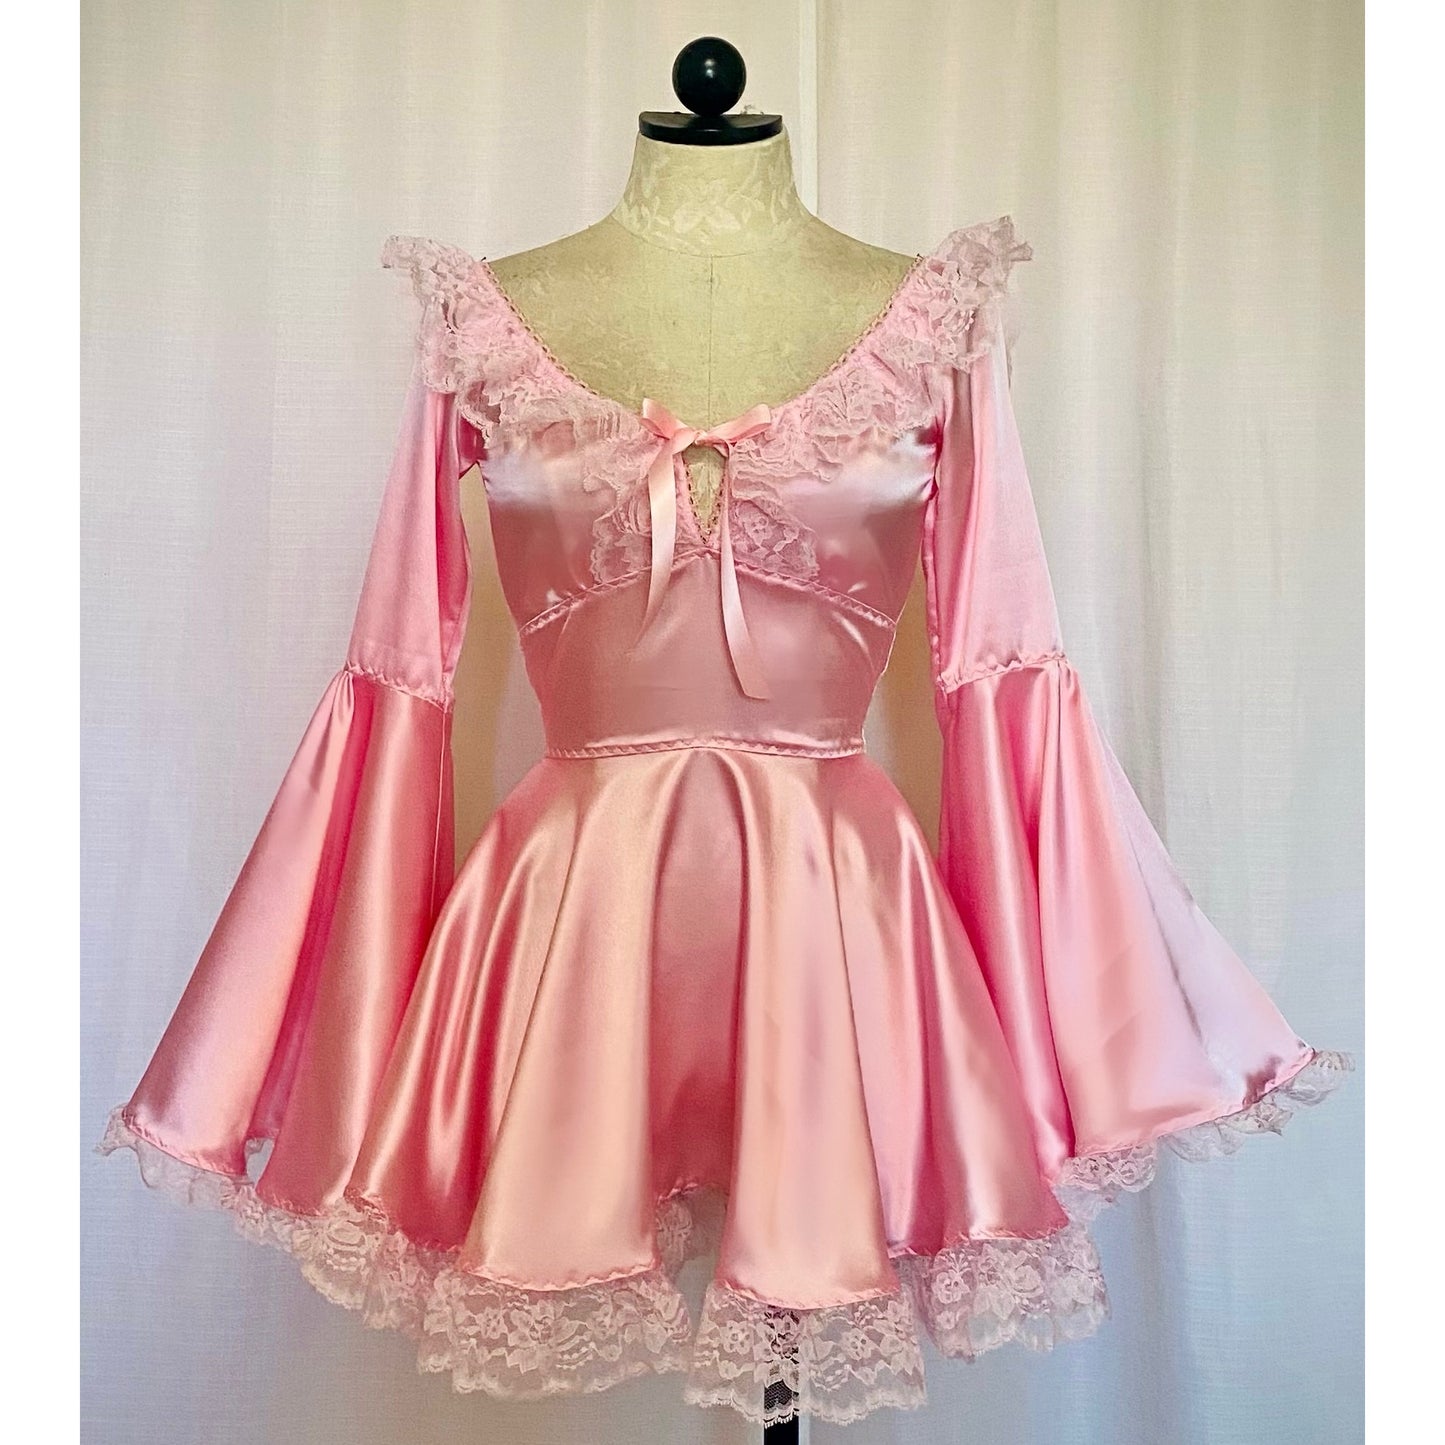 The Deidre Dress in Baby Pink